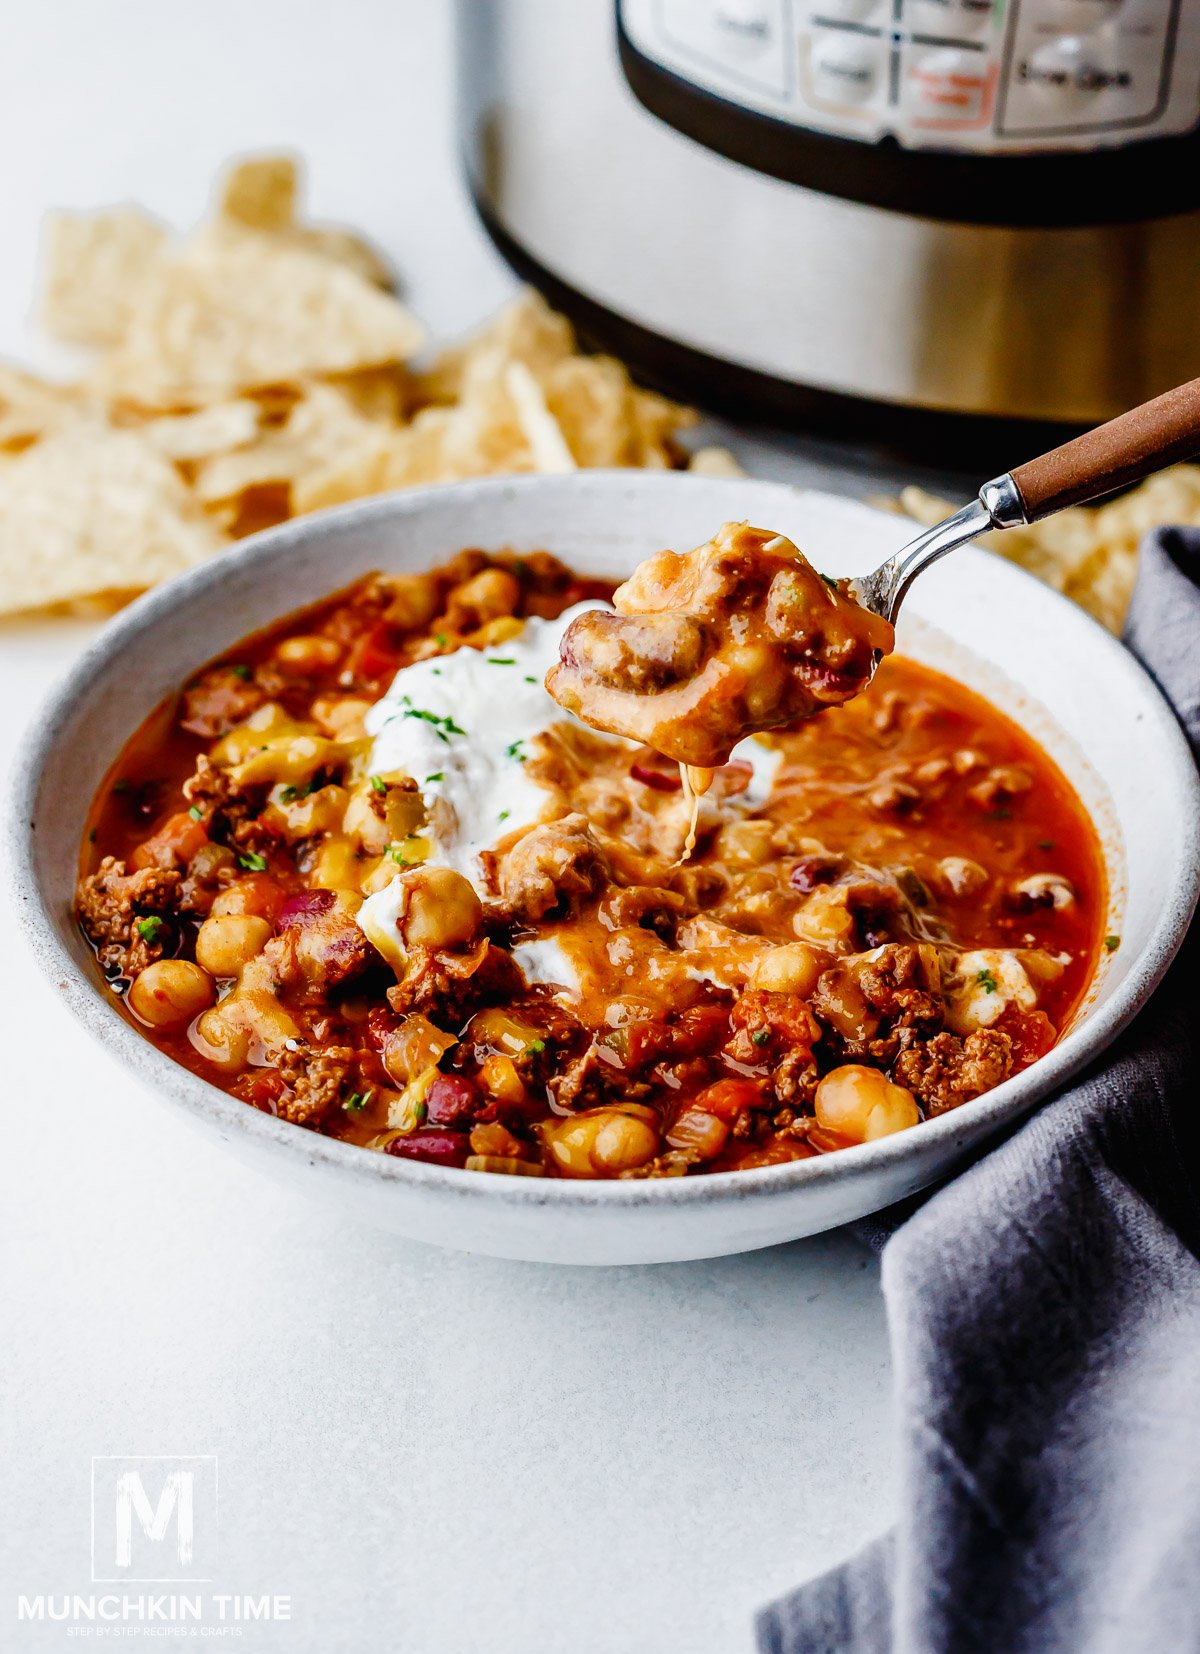 Instant pot chili recipe - it is the best chili recipe.